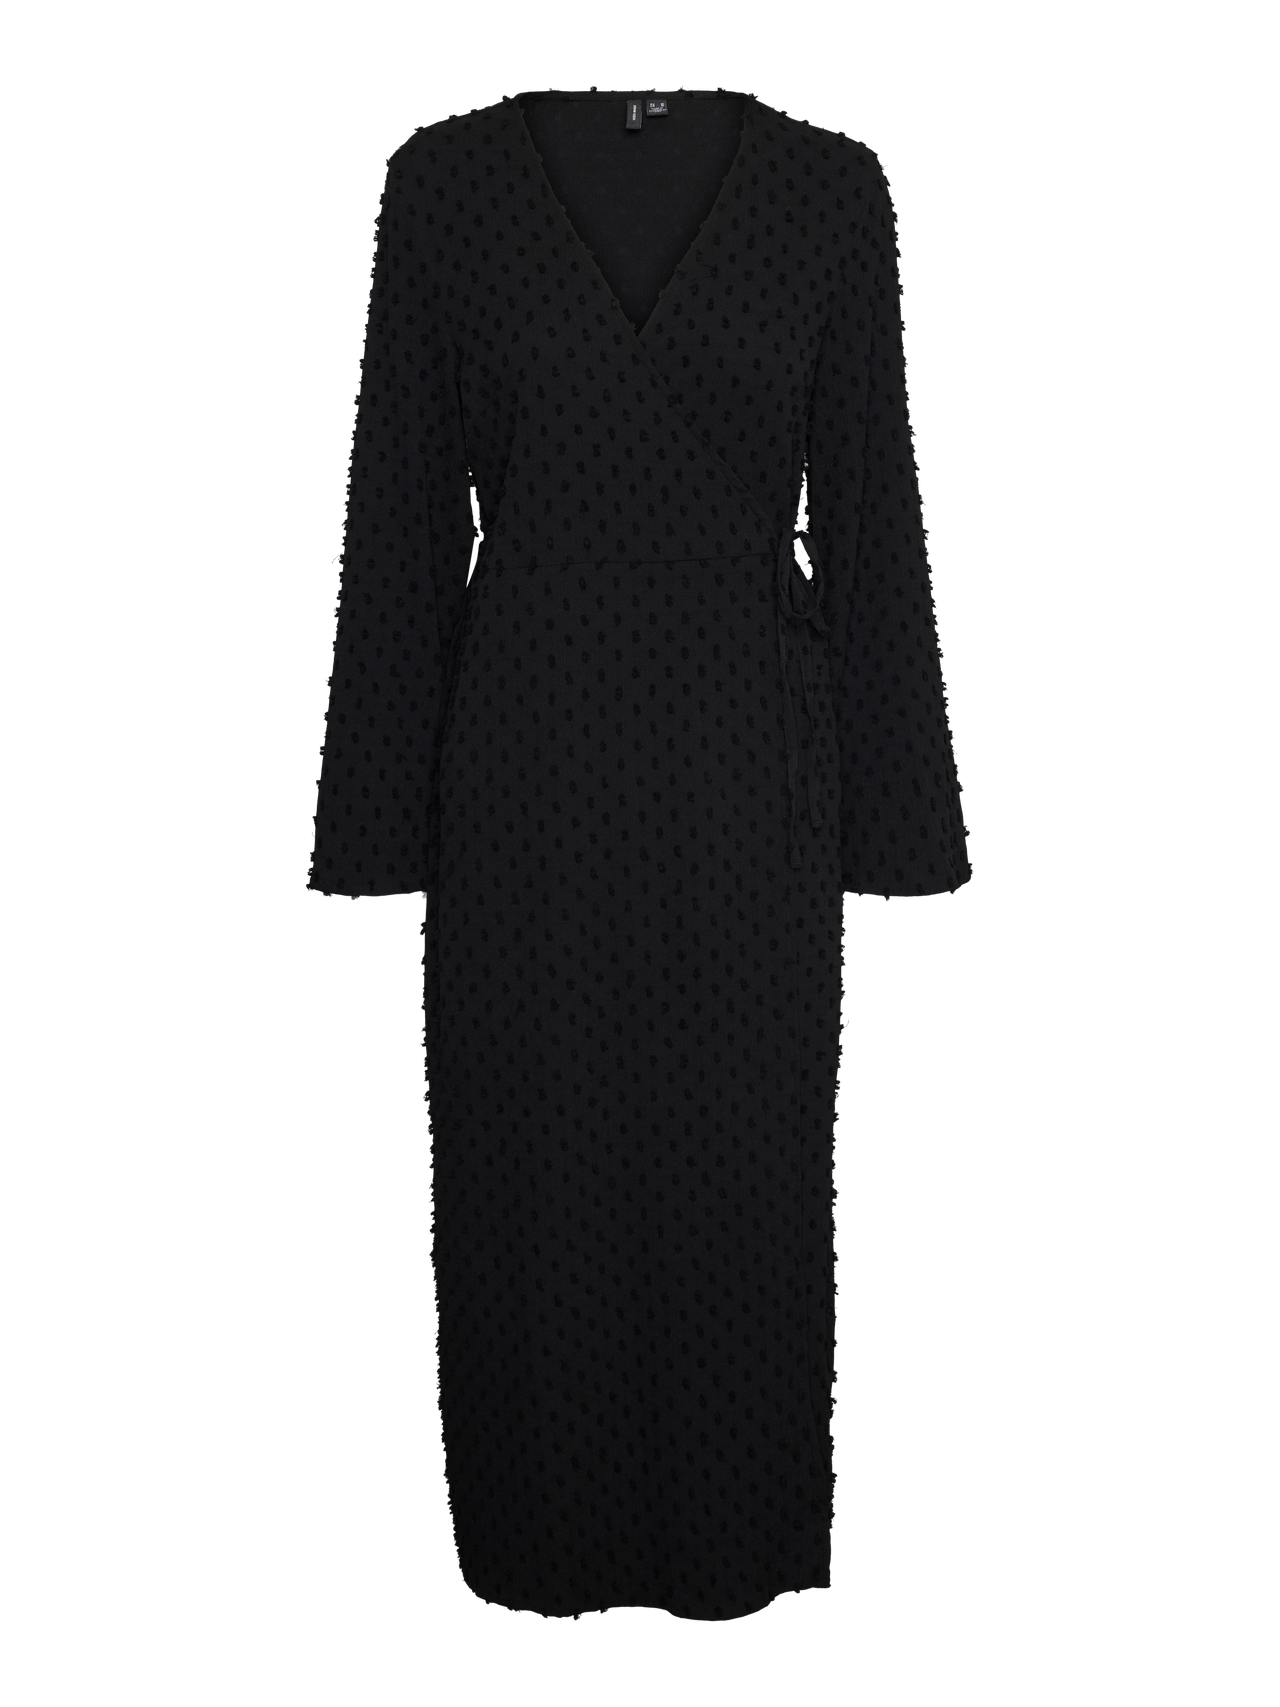 Vero Moda VMVILLA Robe longue -Black - 10314042